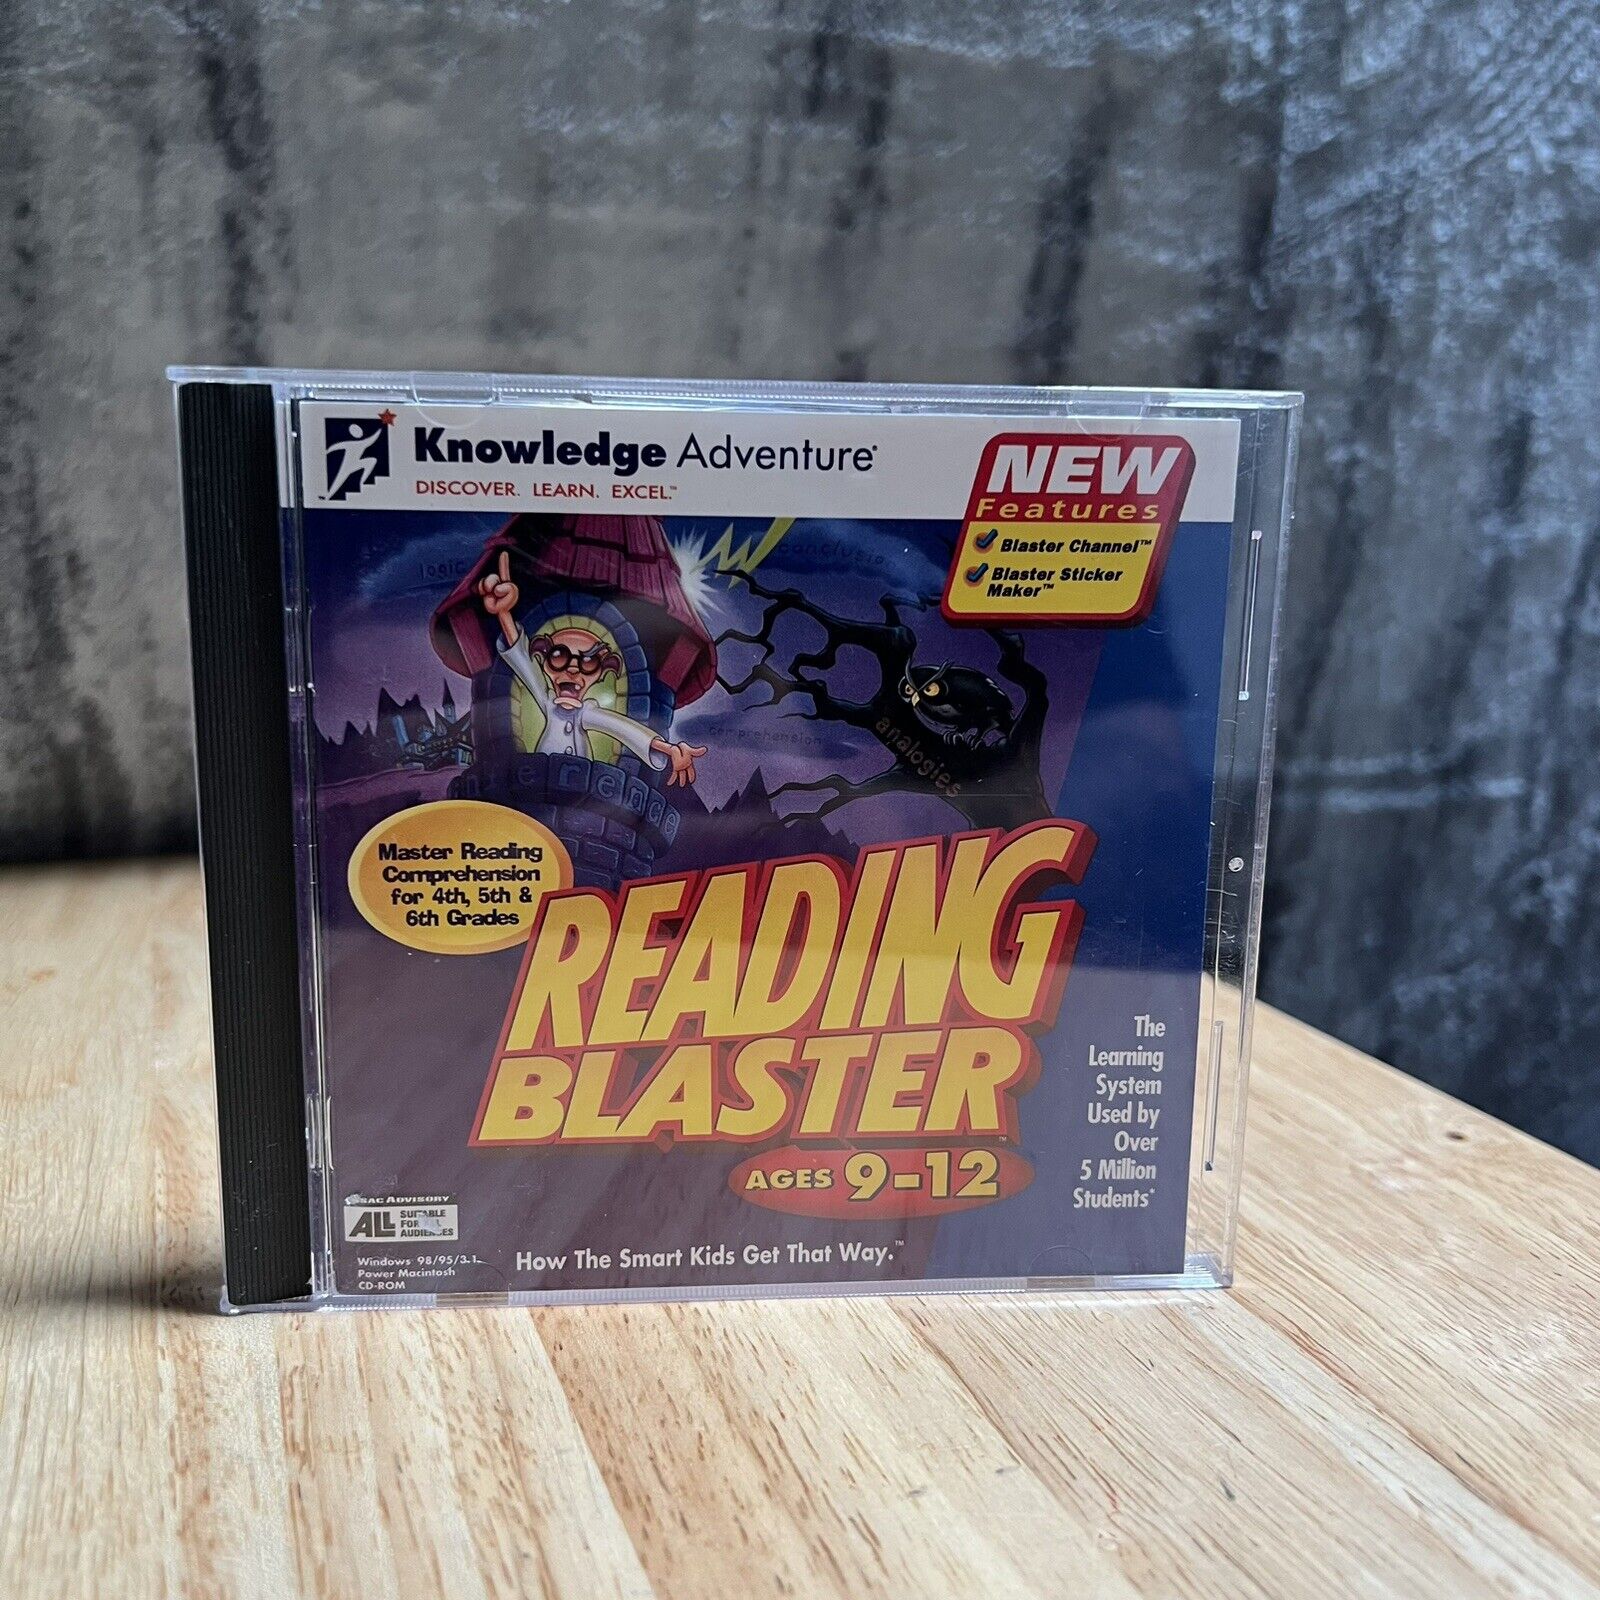 Reading Blaster Vocabulary CD Ages 9-12 (1998, Knowledge Adventure) Windows 98